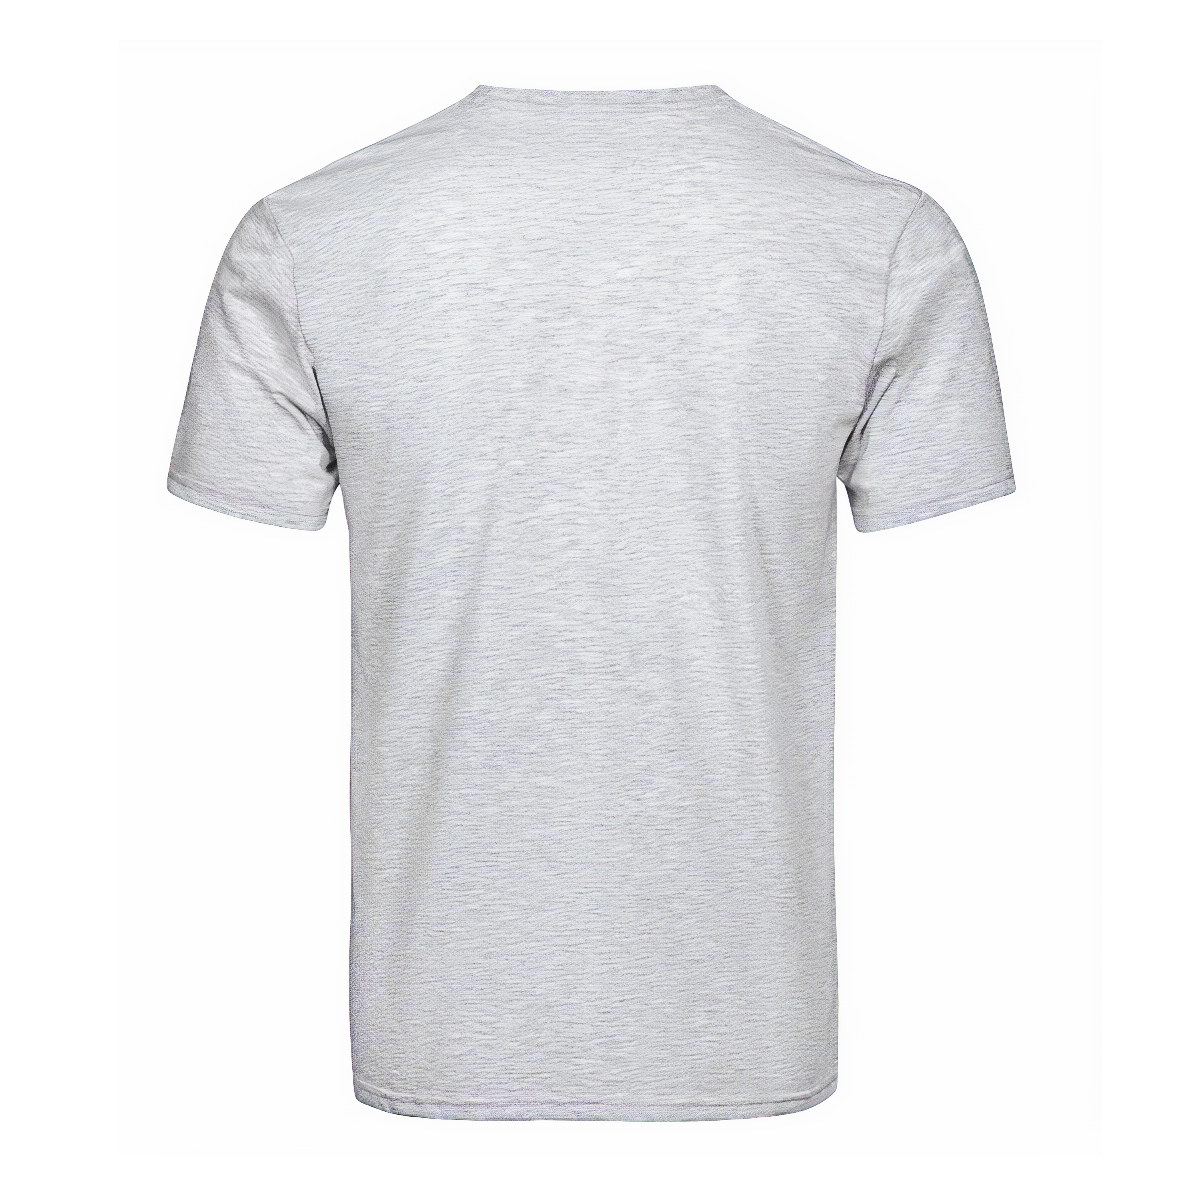 Forbes Modern Tartan Crest T-shirt - I'm not yelling style